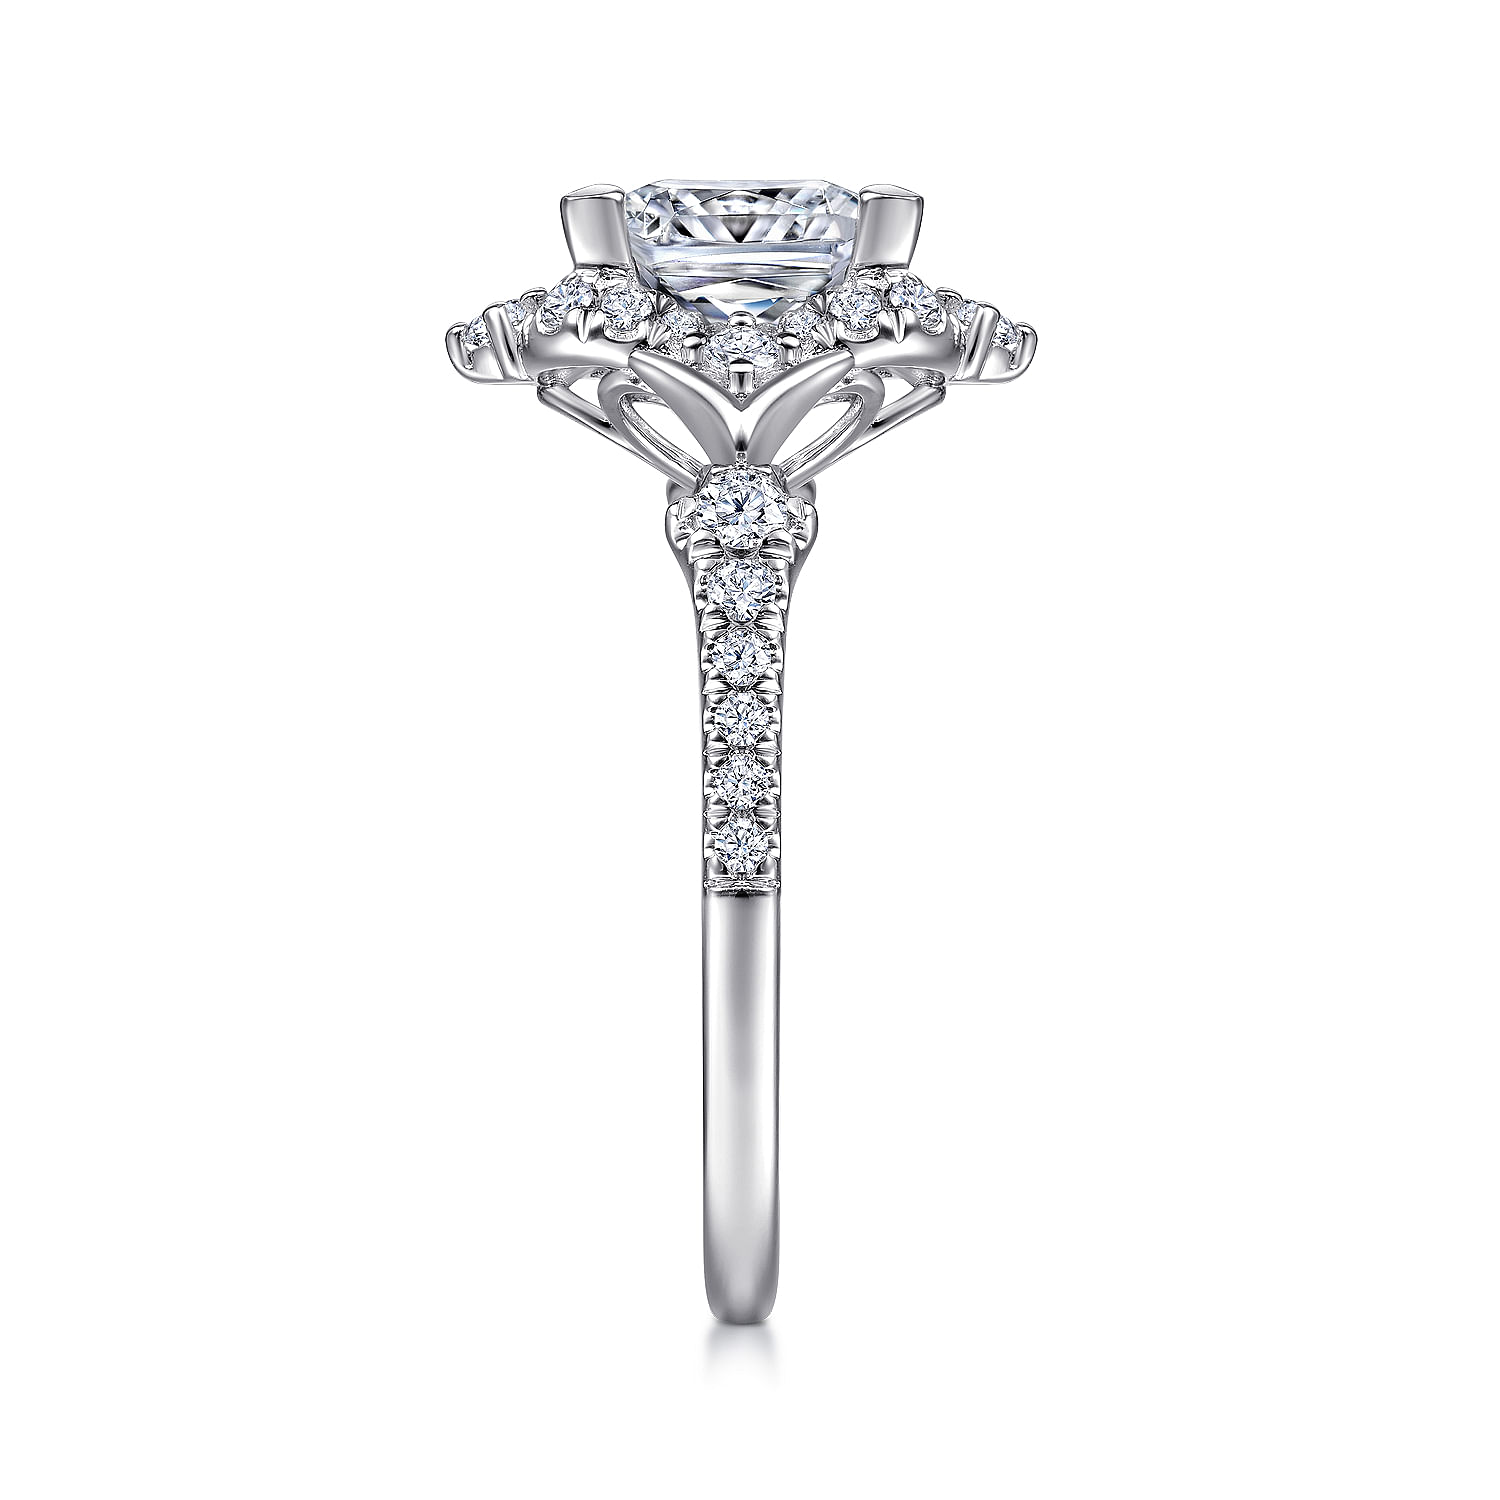 Unique 14K White Gold Vintage Inspired Princess Cut Halo Diamond Engagement Ring